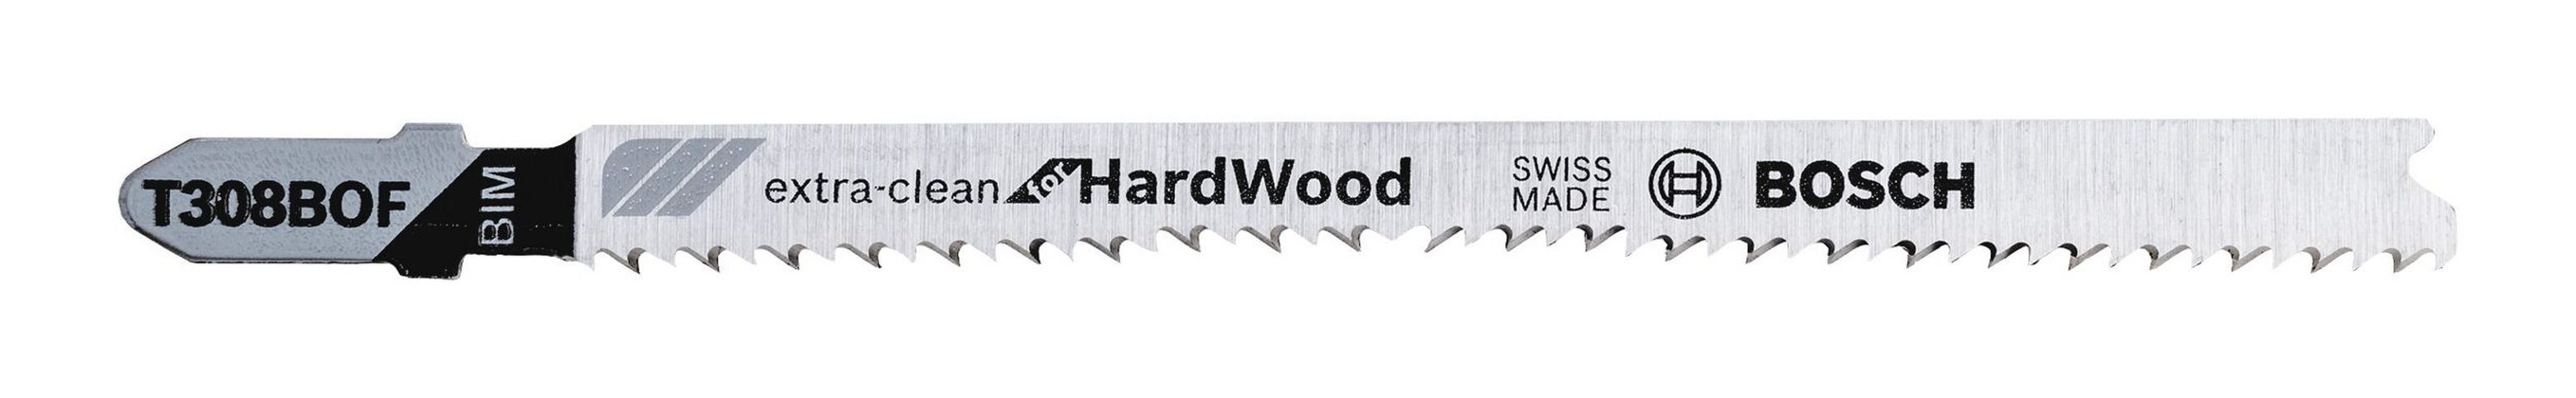 Wood Hard for BOSCH BOF Stück), T 308 - Extraclean 25er-Pack (25 Stichsägeblatt